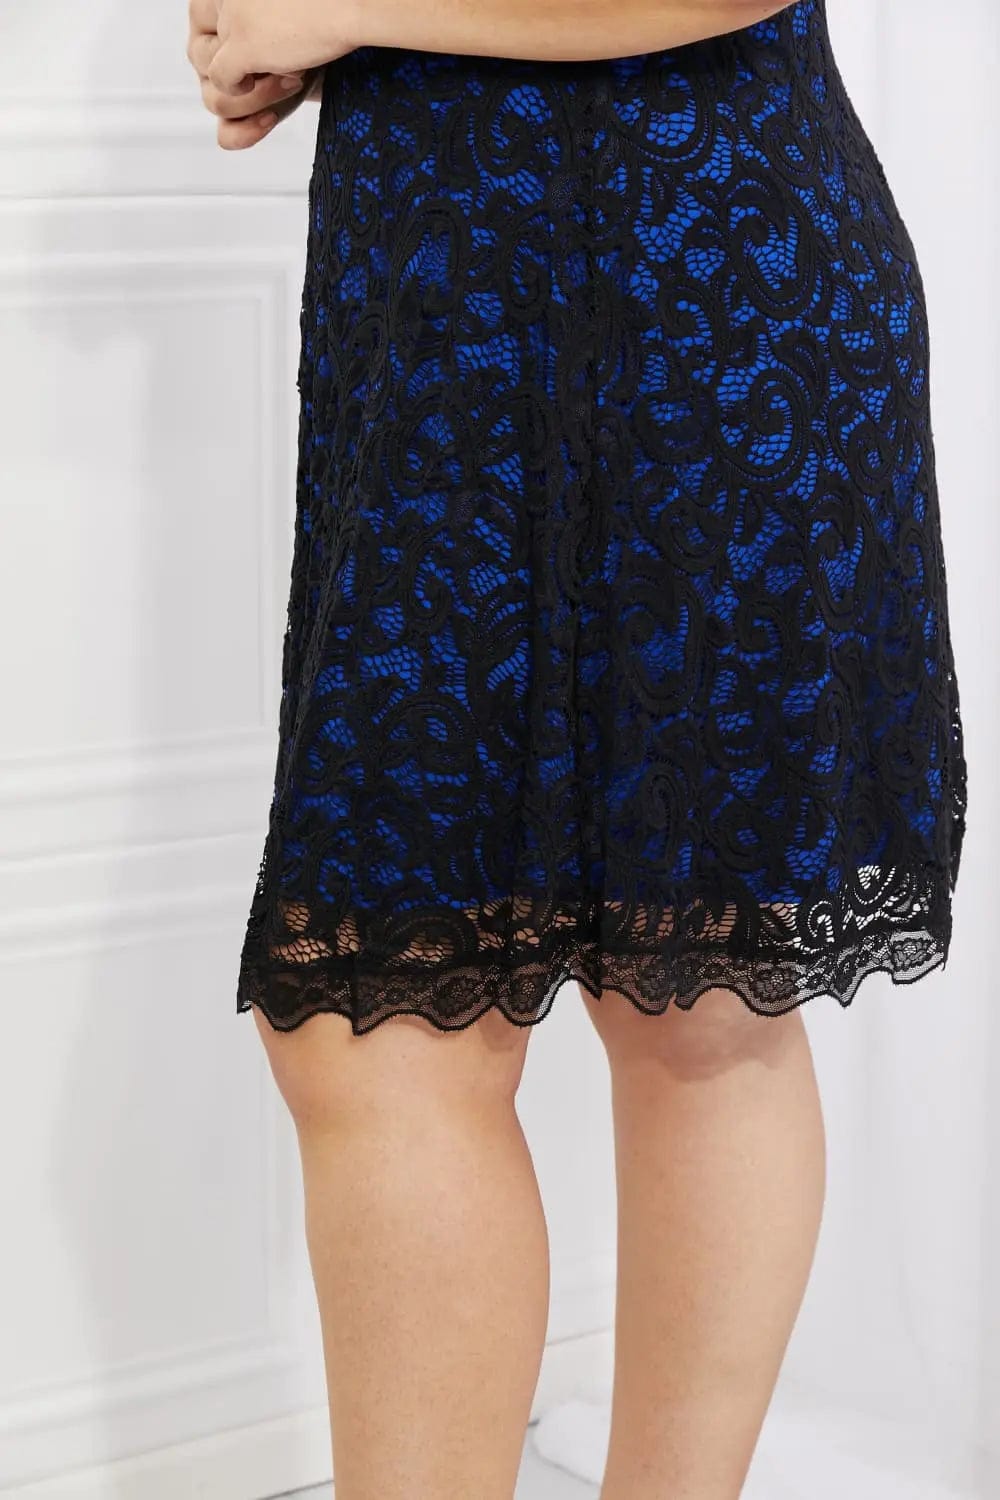 Yelete Full Size Contrasting Lace Midi Dress  38.00 MPGD Corp Merchandise